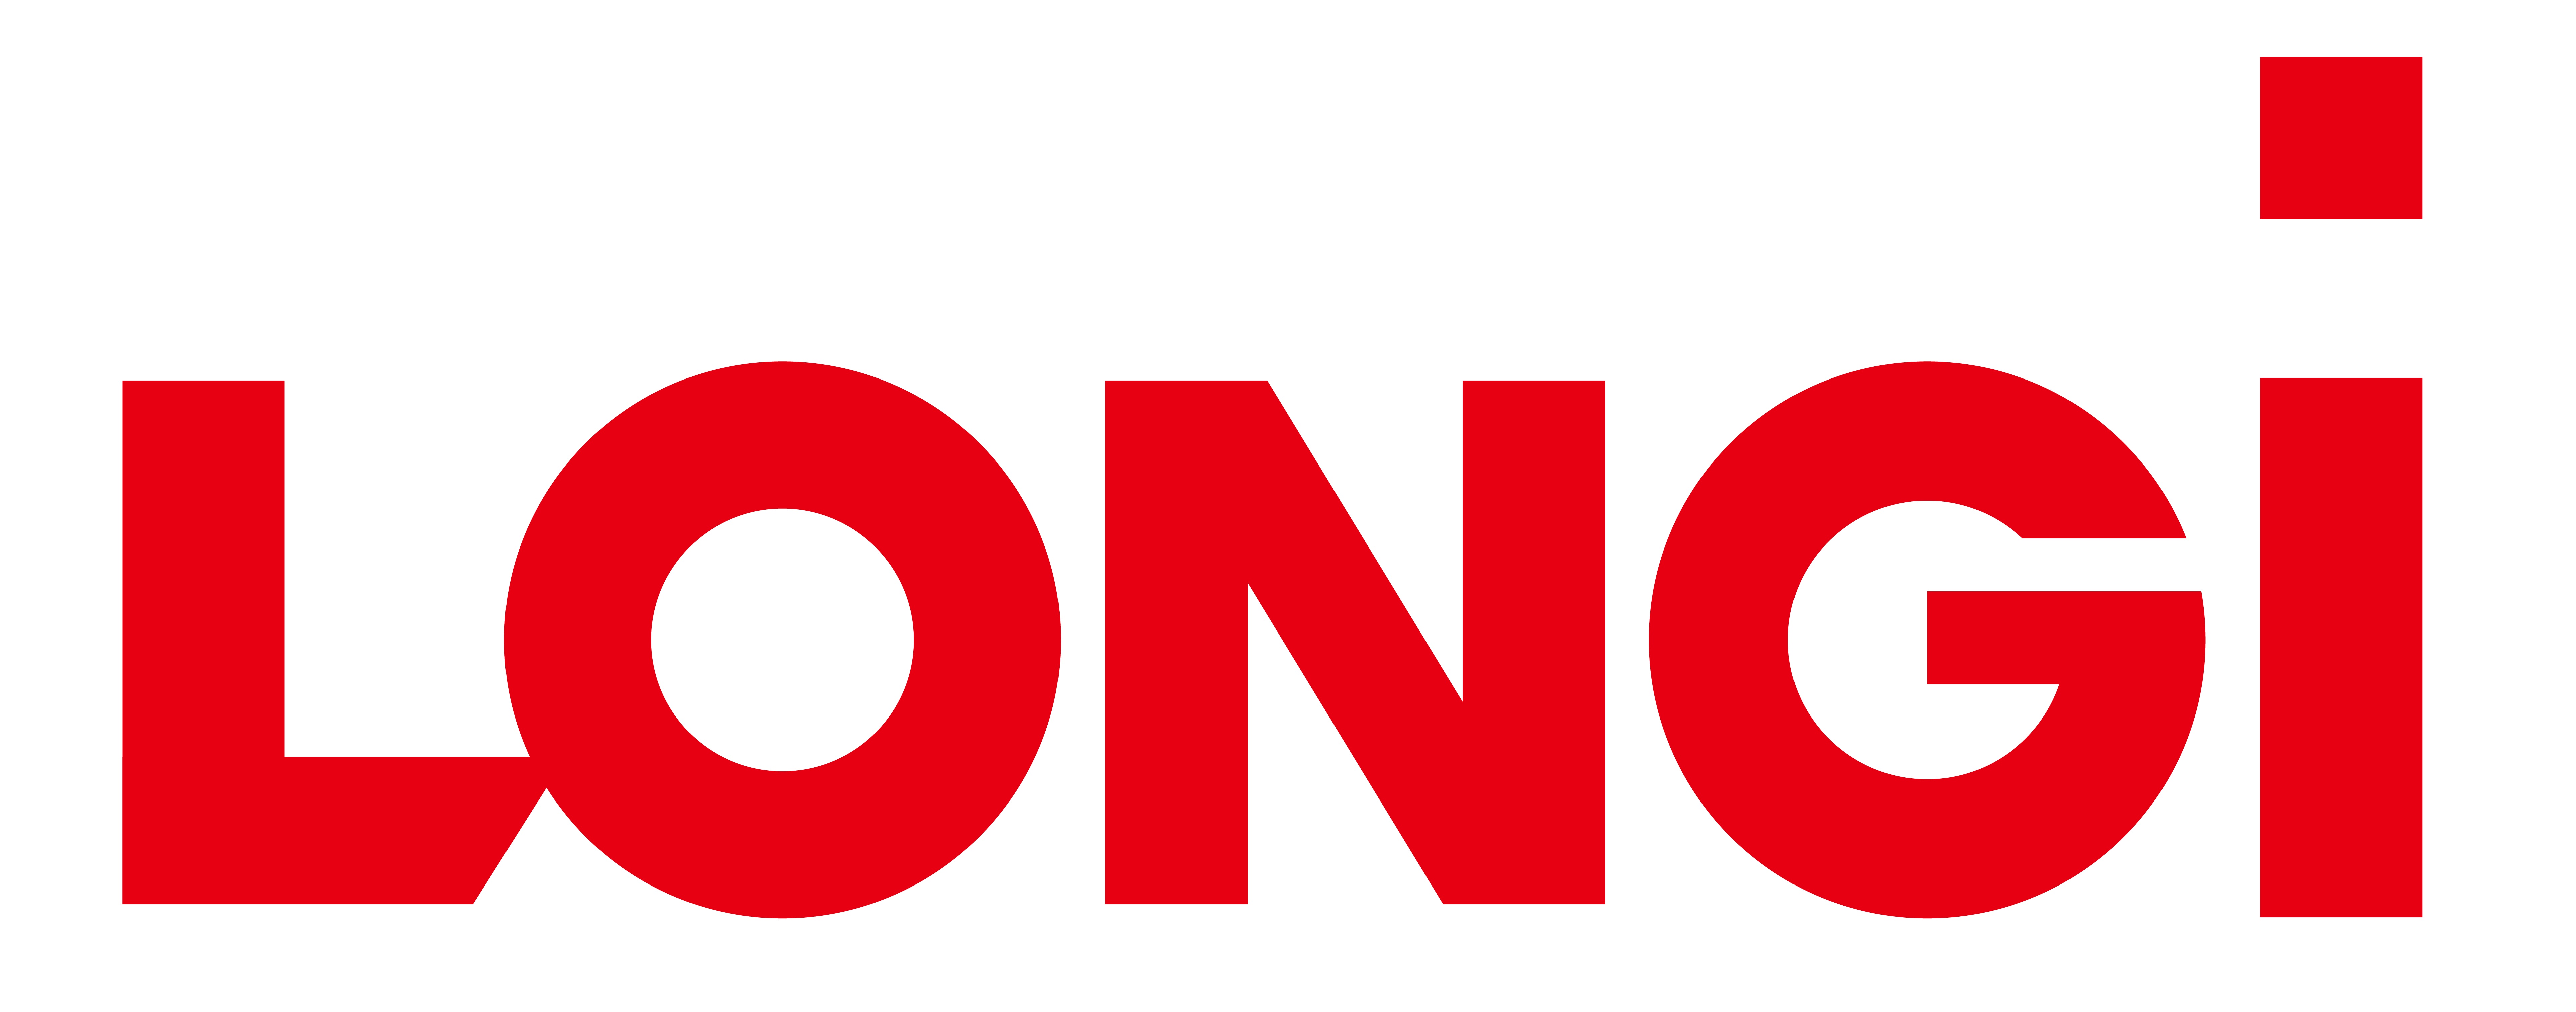 LONGi logo_LONGi Solar_large image_Download_PR-Newswire